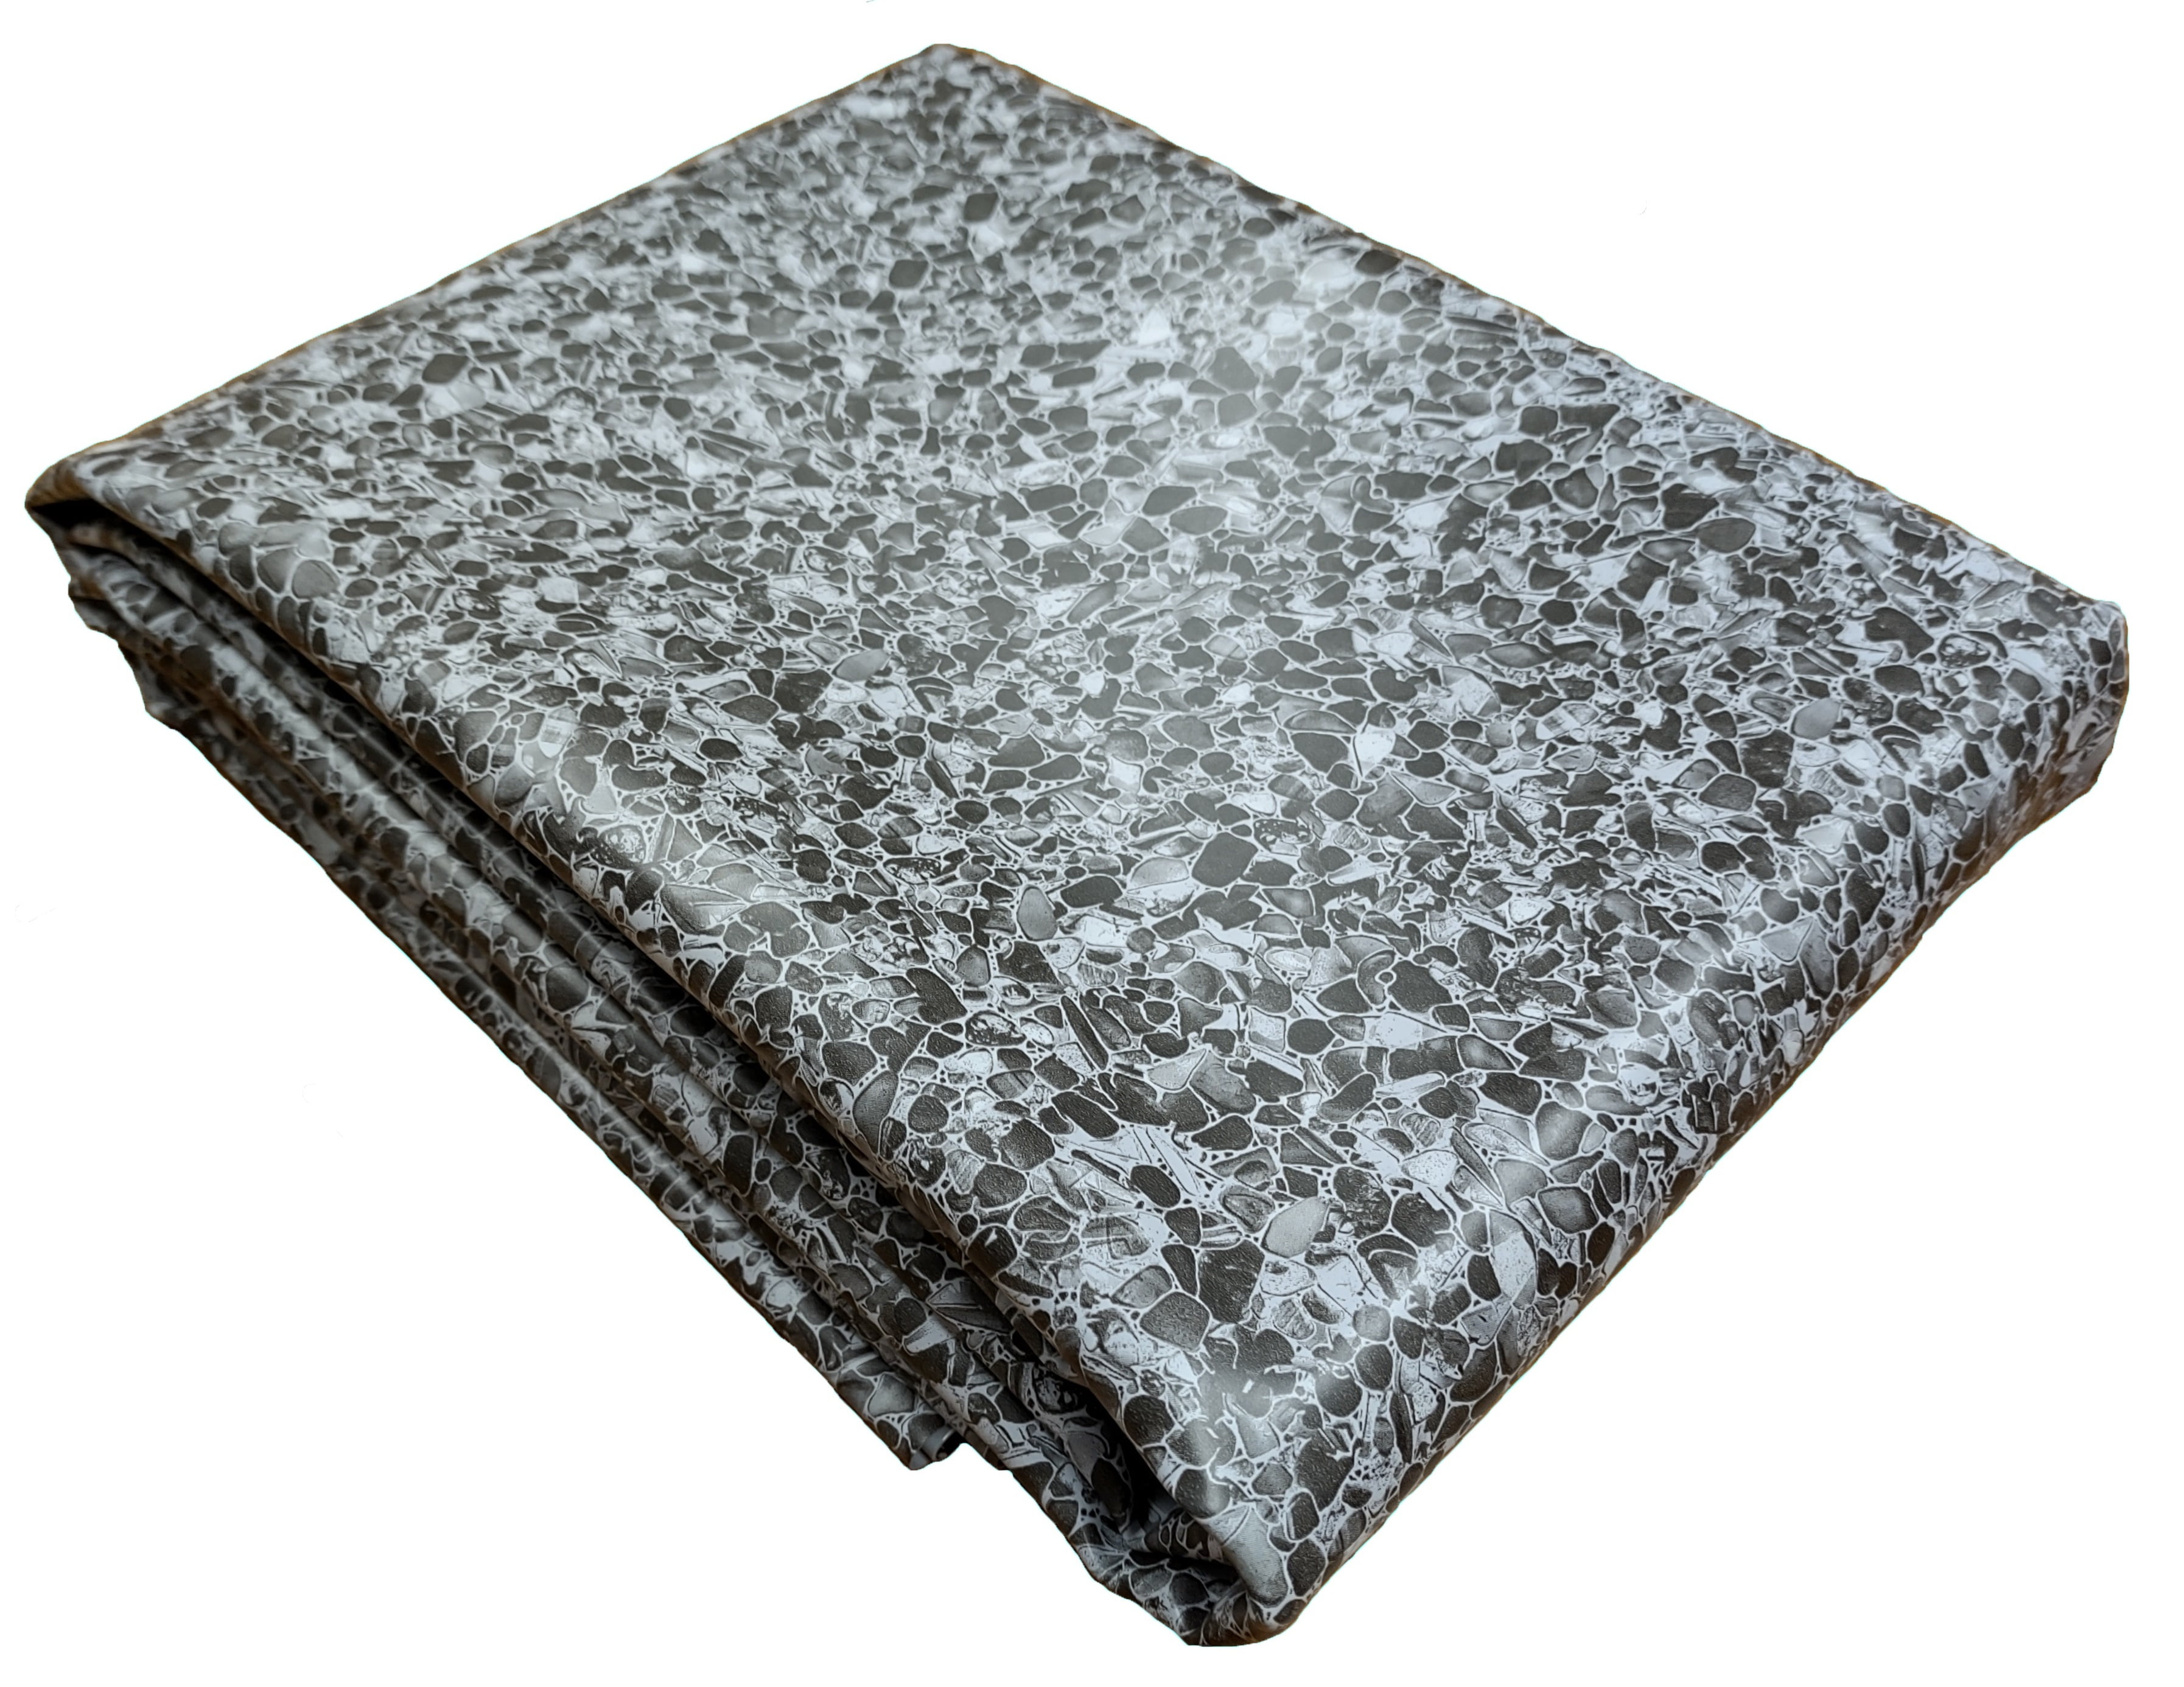 Granular Bentonite Clay for Pond Sealing - 45 pounds